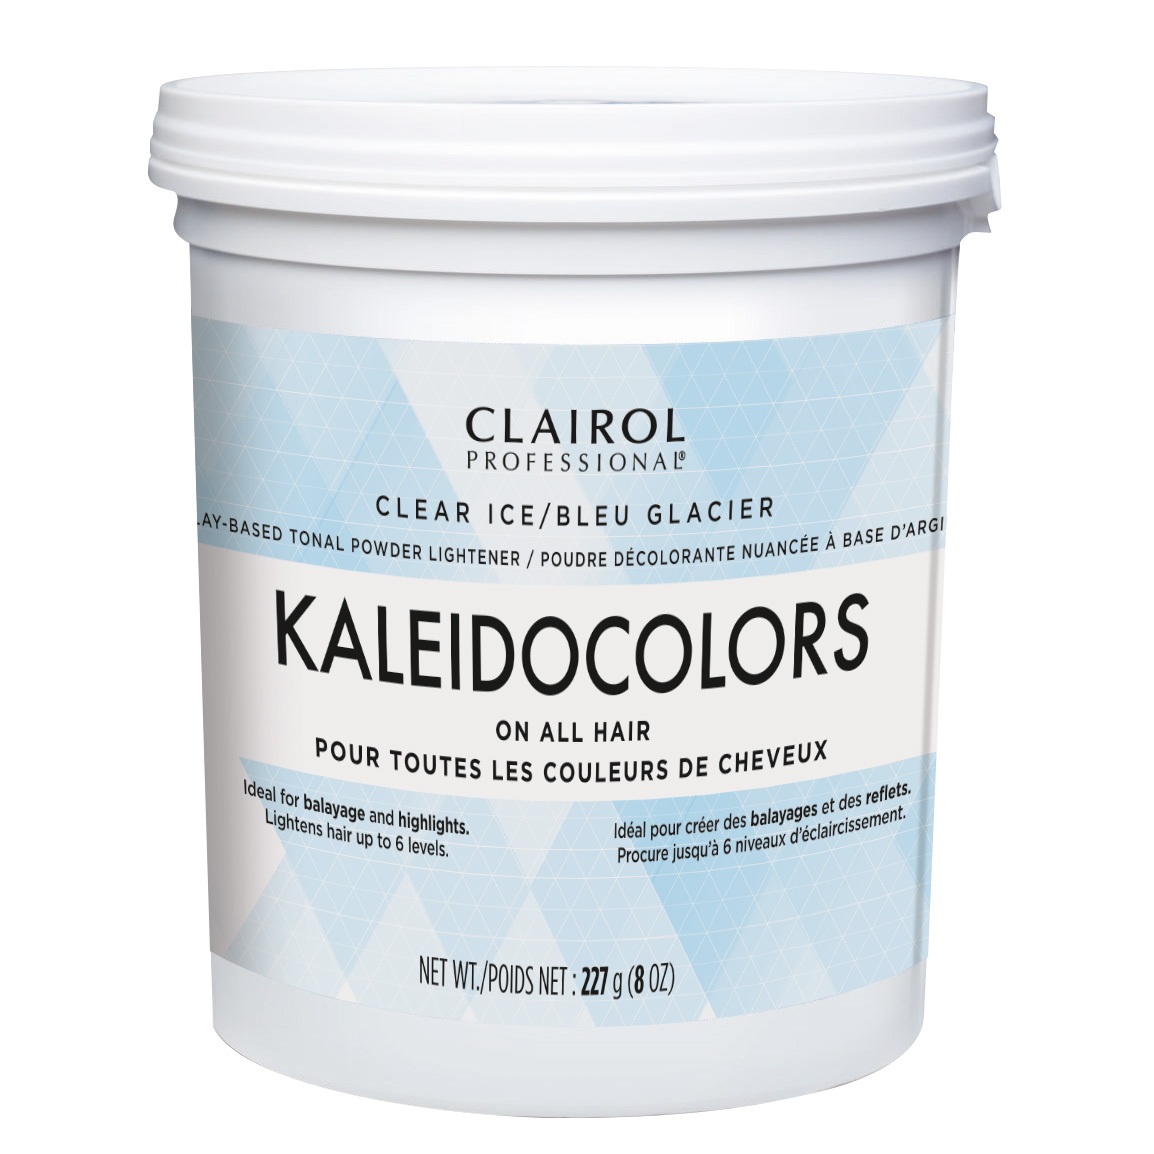 Clairol Kaleidocolor Clear Ice